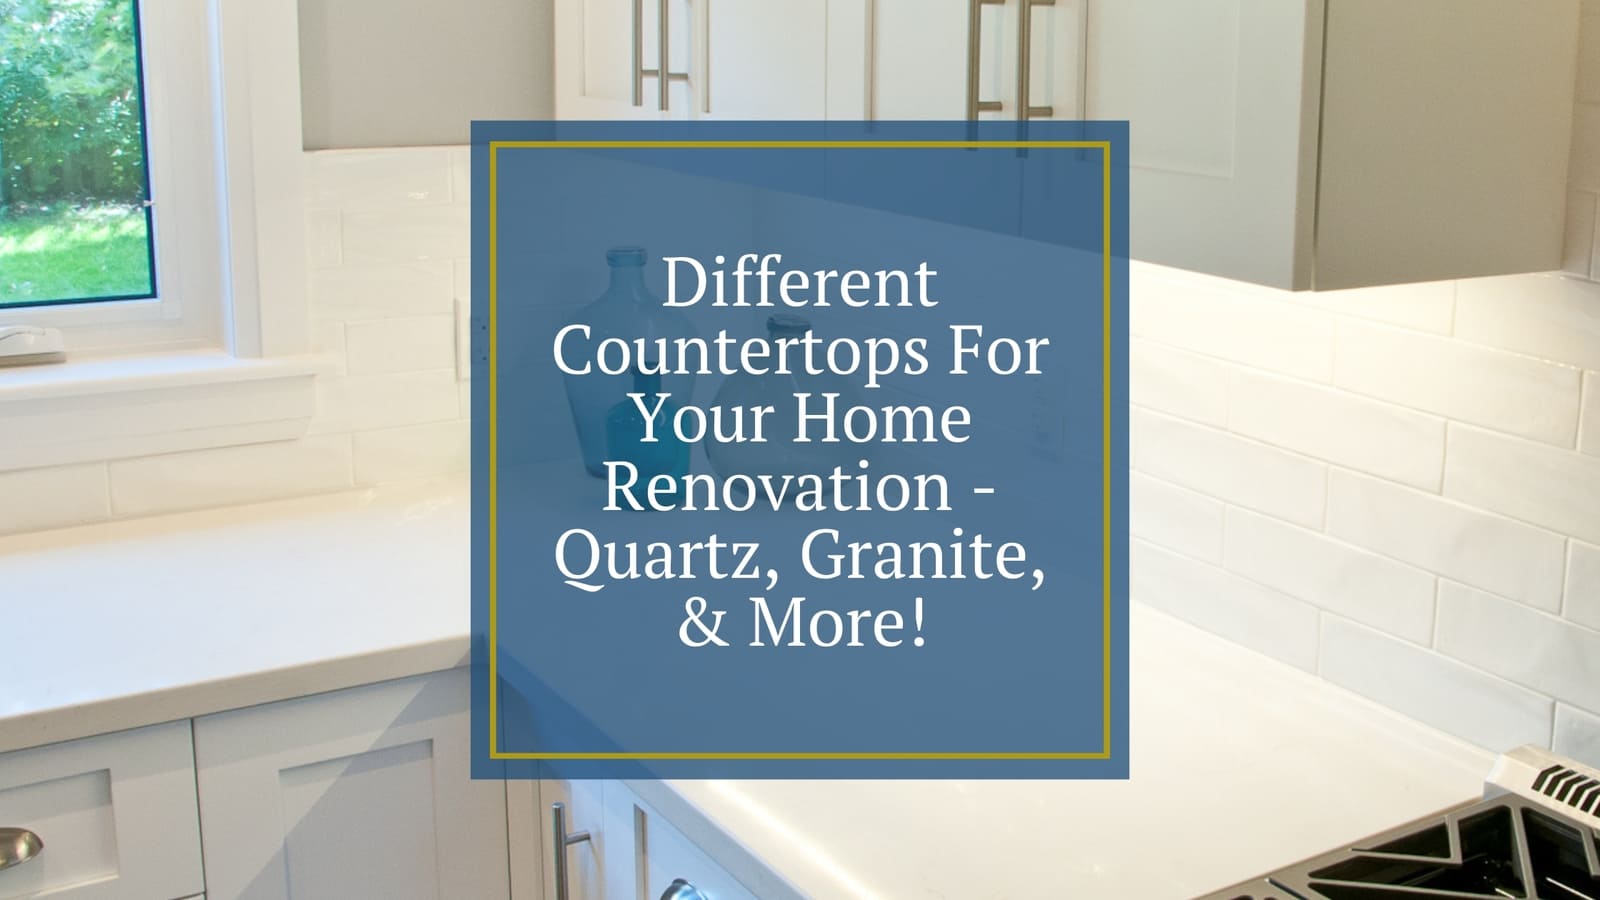 Different Countertops For Your Home Renovation - Quartz, Granite, & More!